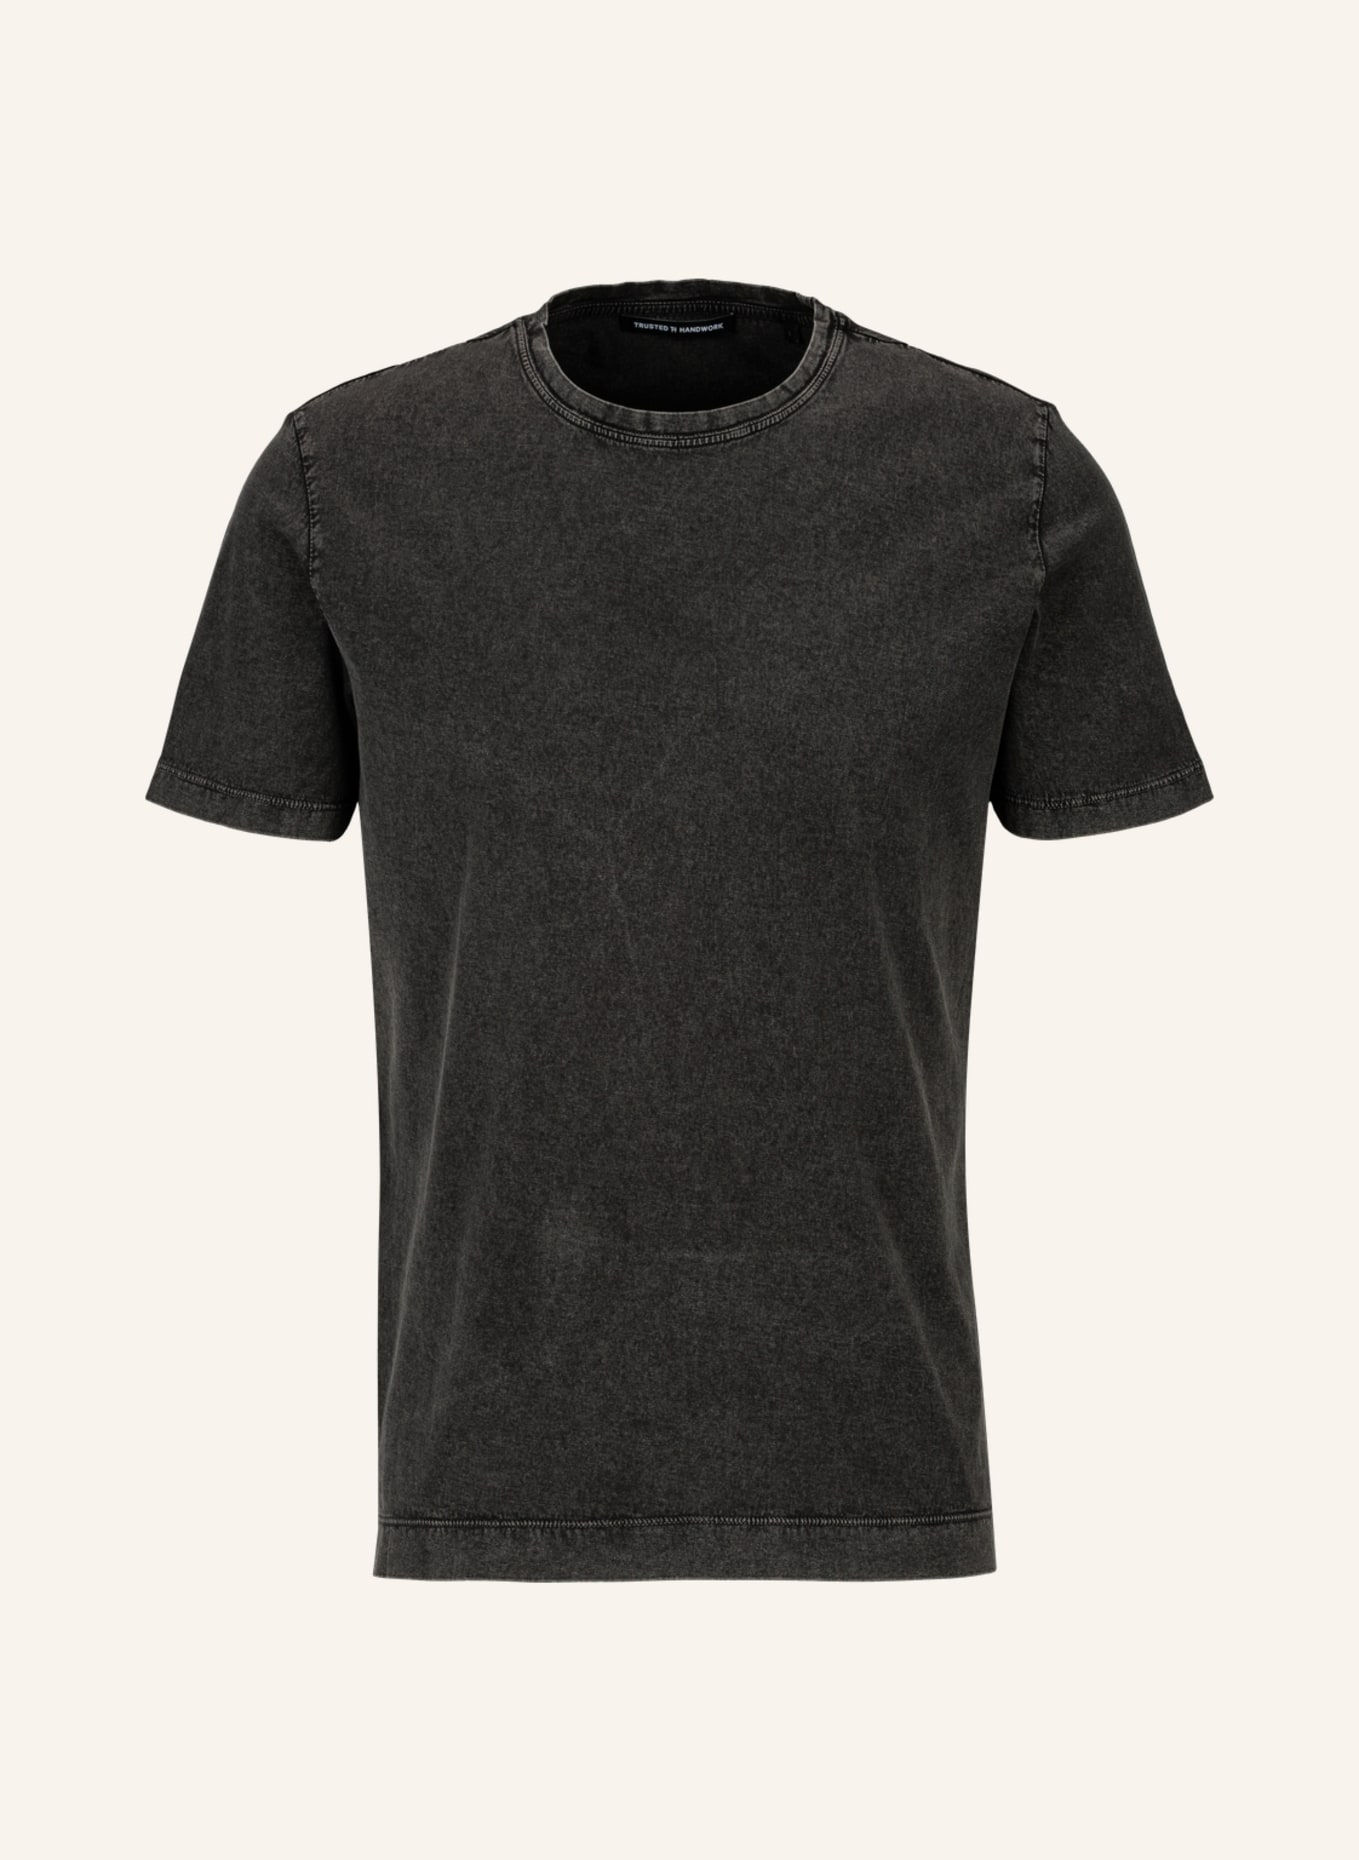 TRUSTED HANDWORK NA T-Shirt Fitted, Farbe: SCHWARZ (Bild 1)